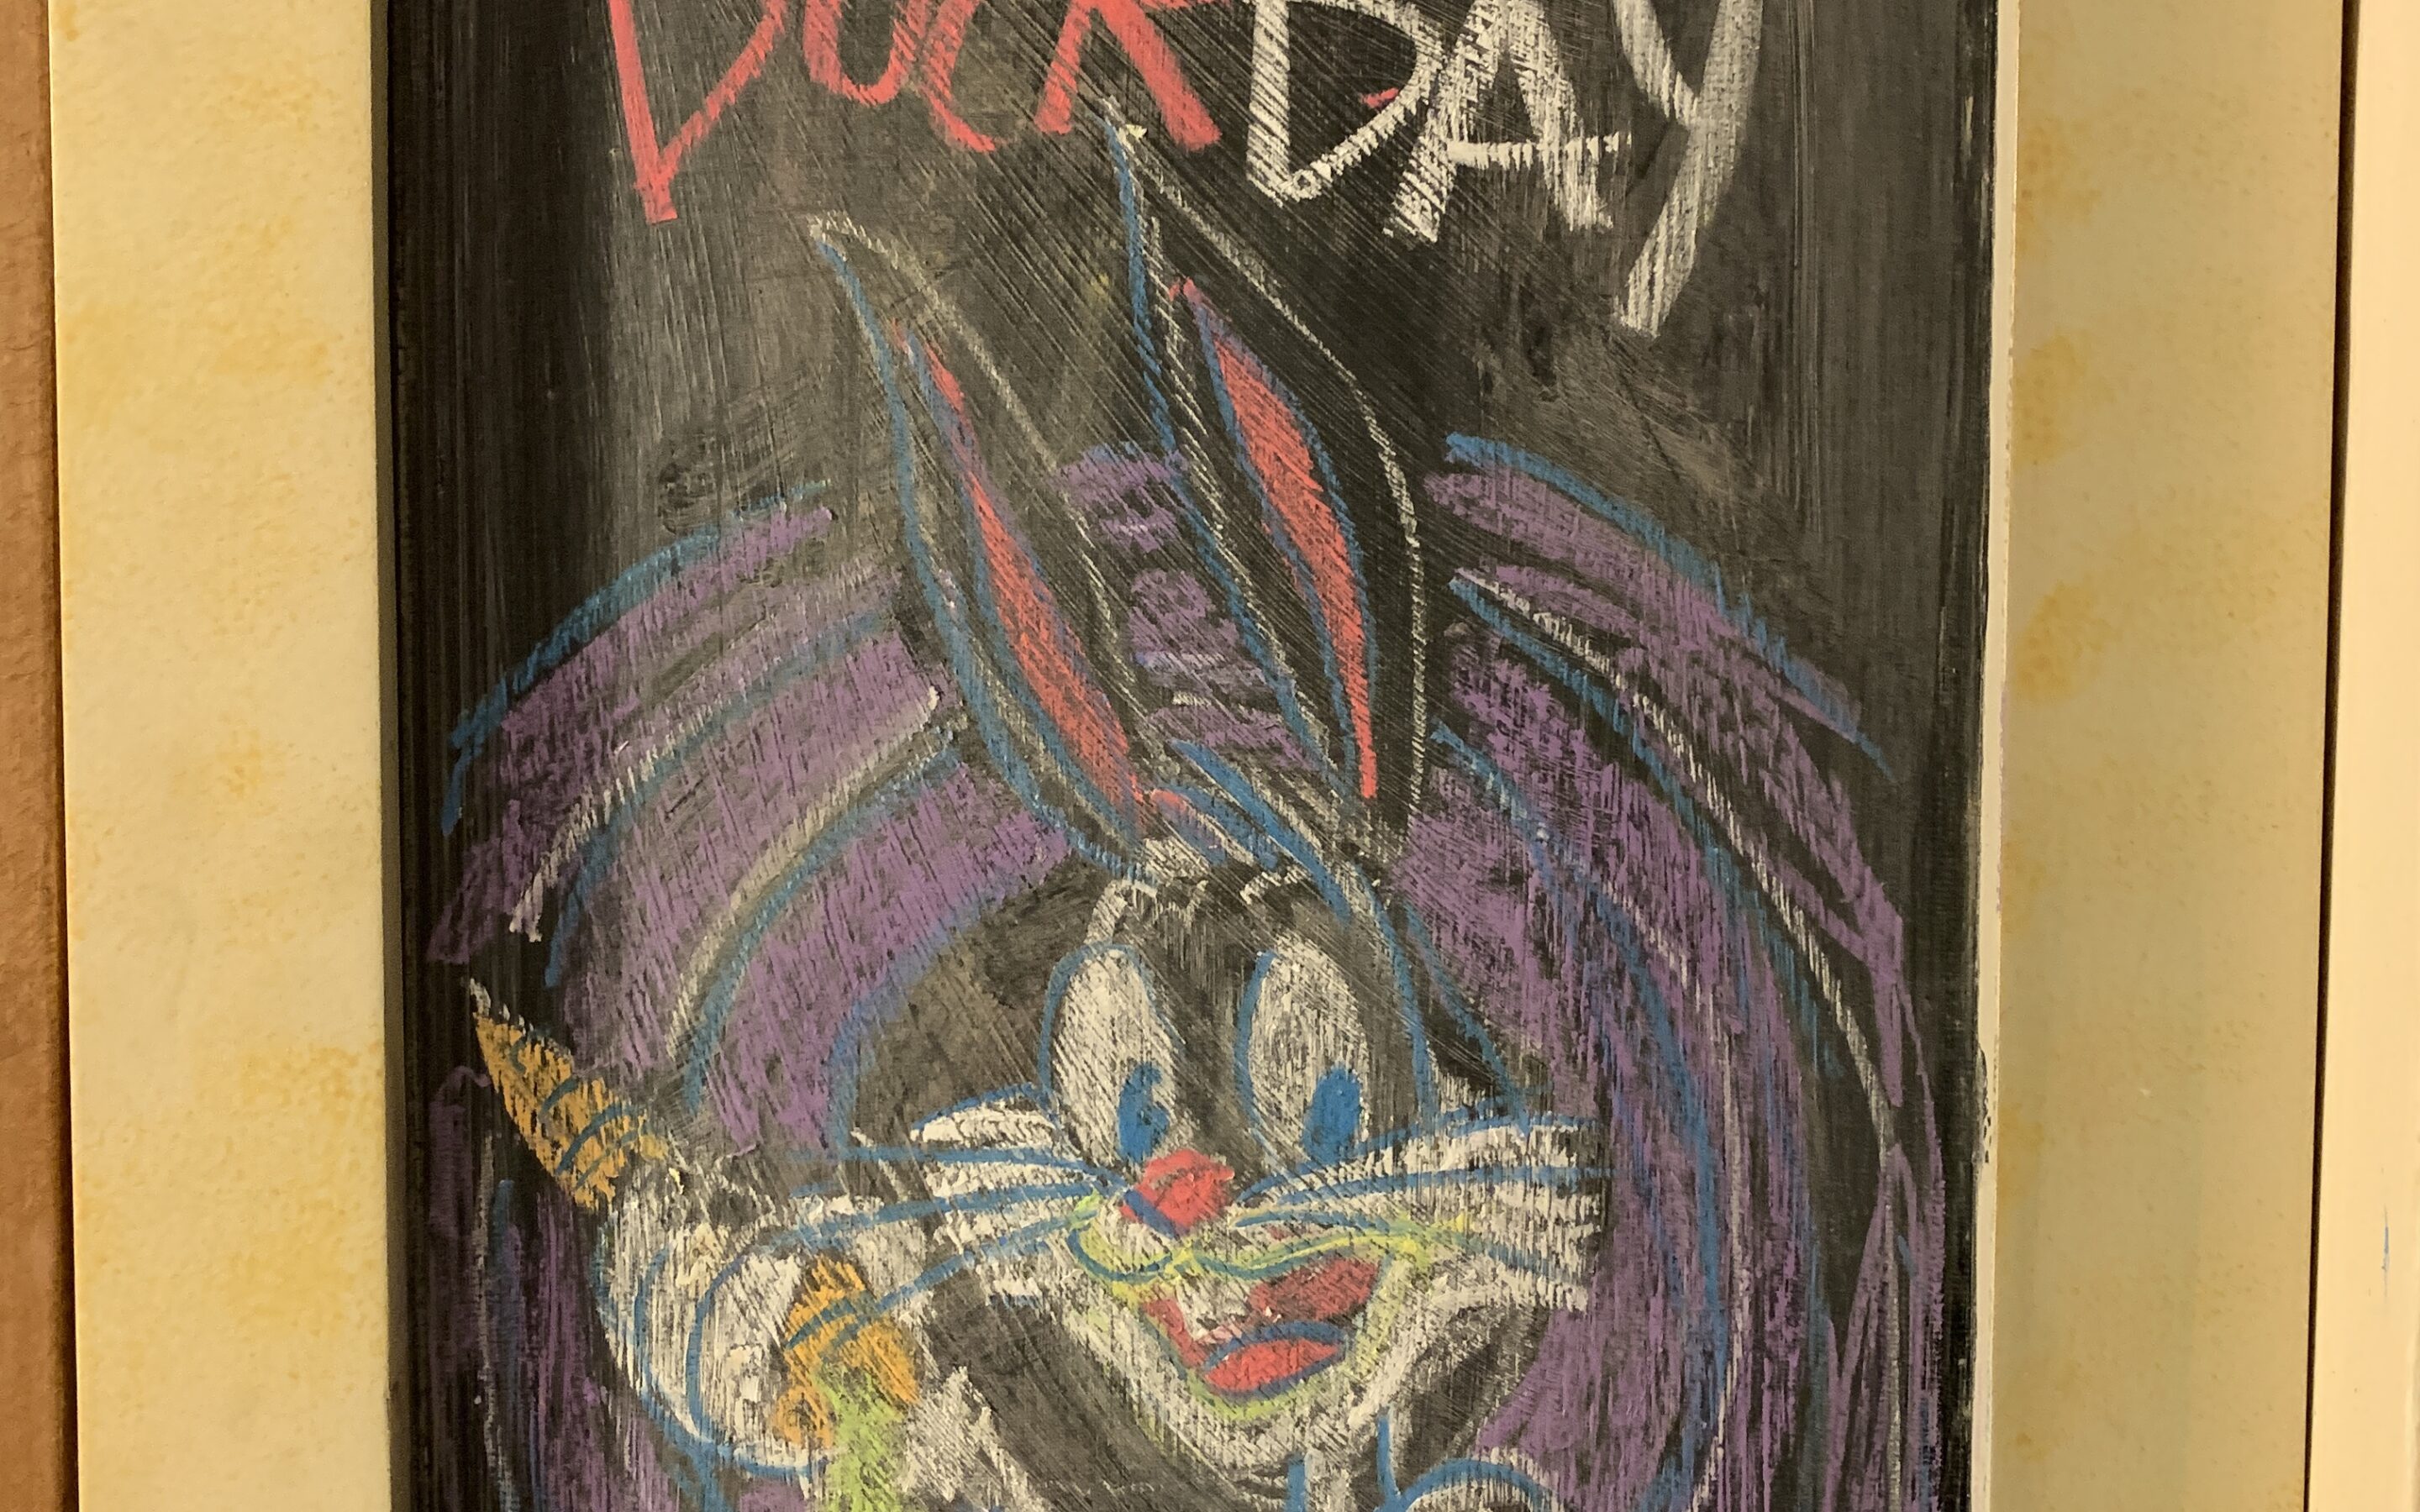 International Rabbit/Bunny Day